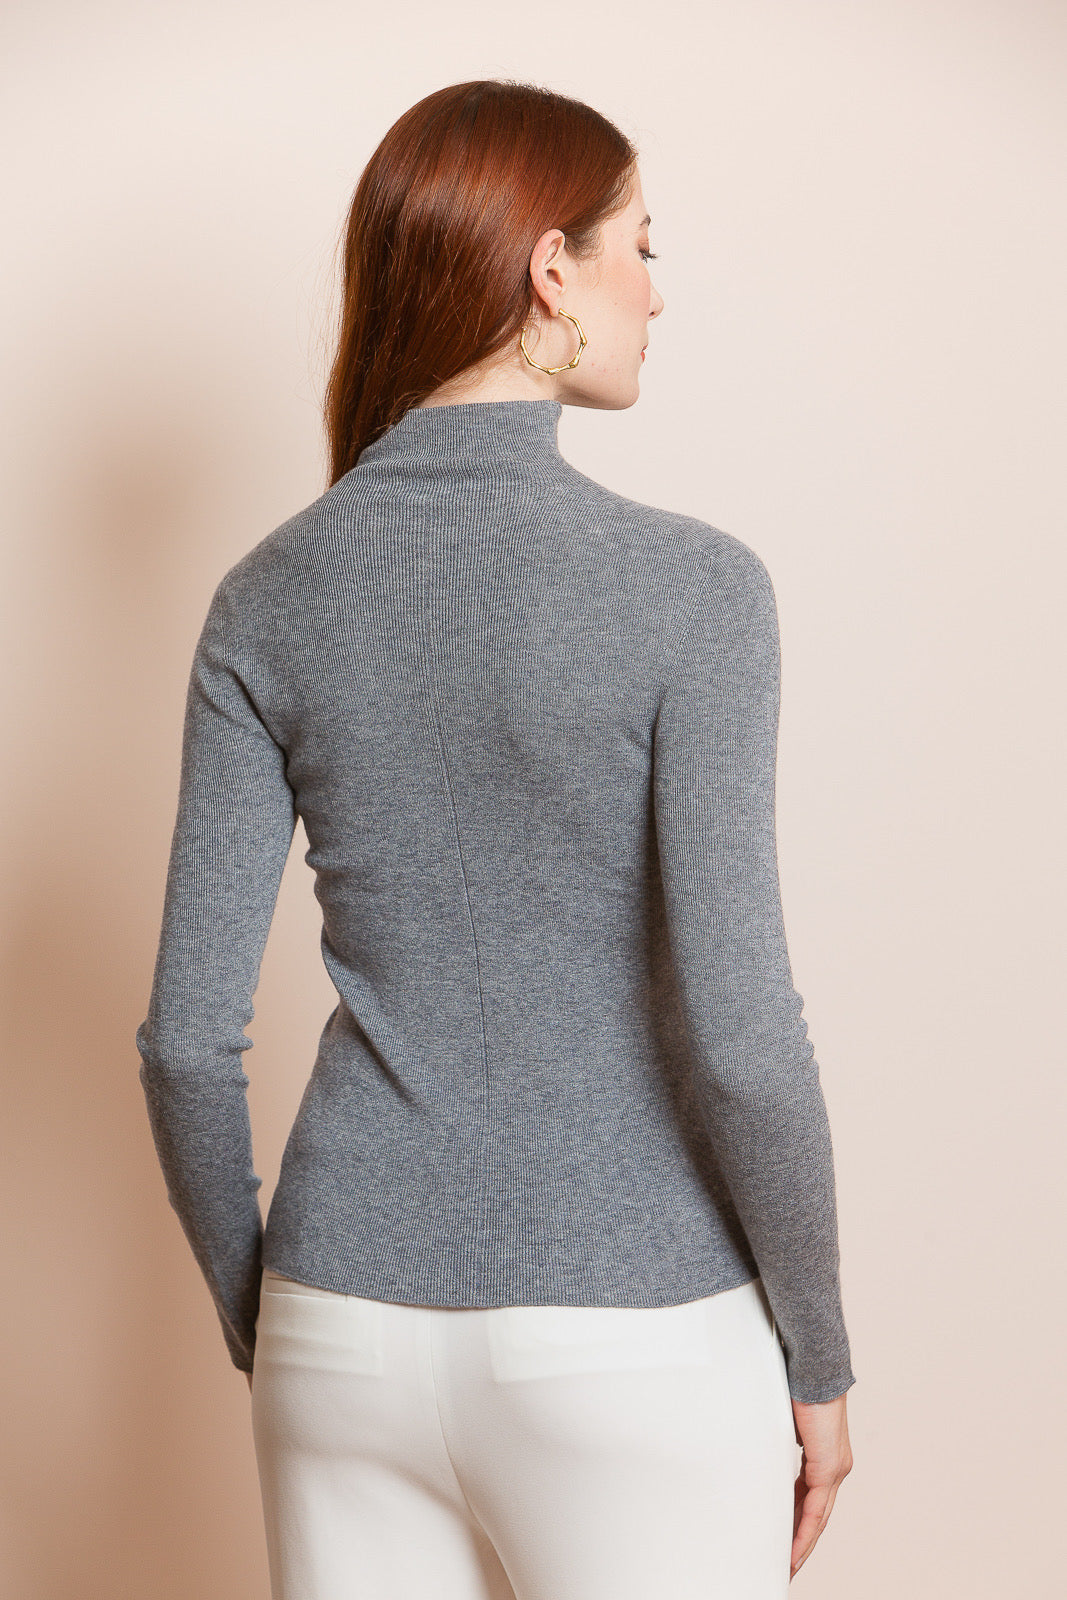 Seamless Merino Wool Blended Turtle Neck Sweater in Grey